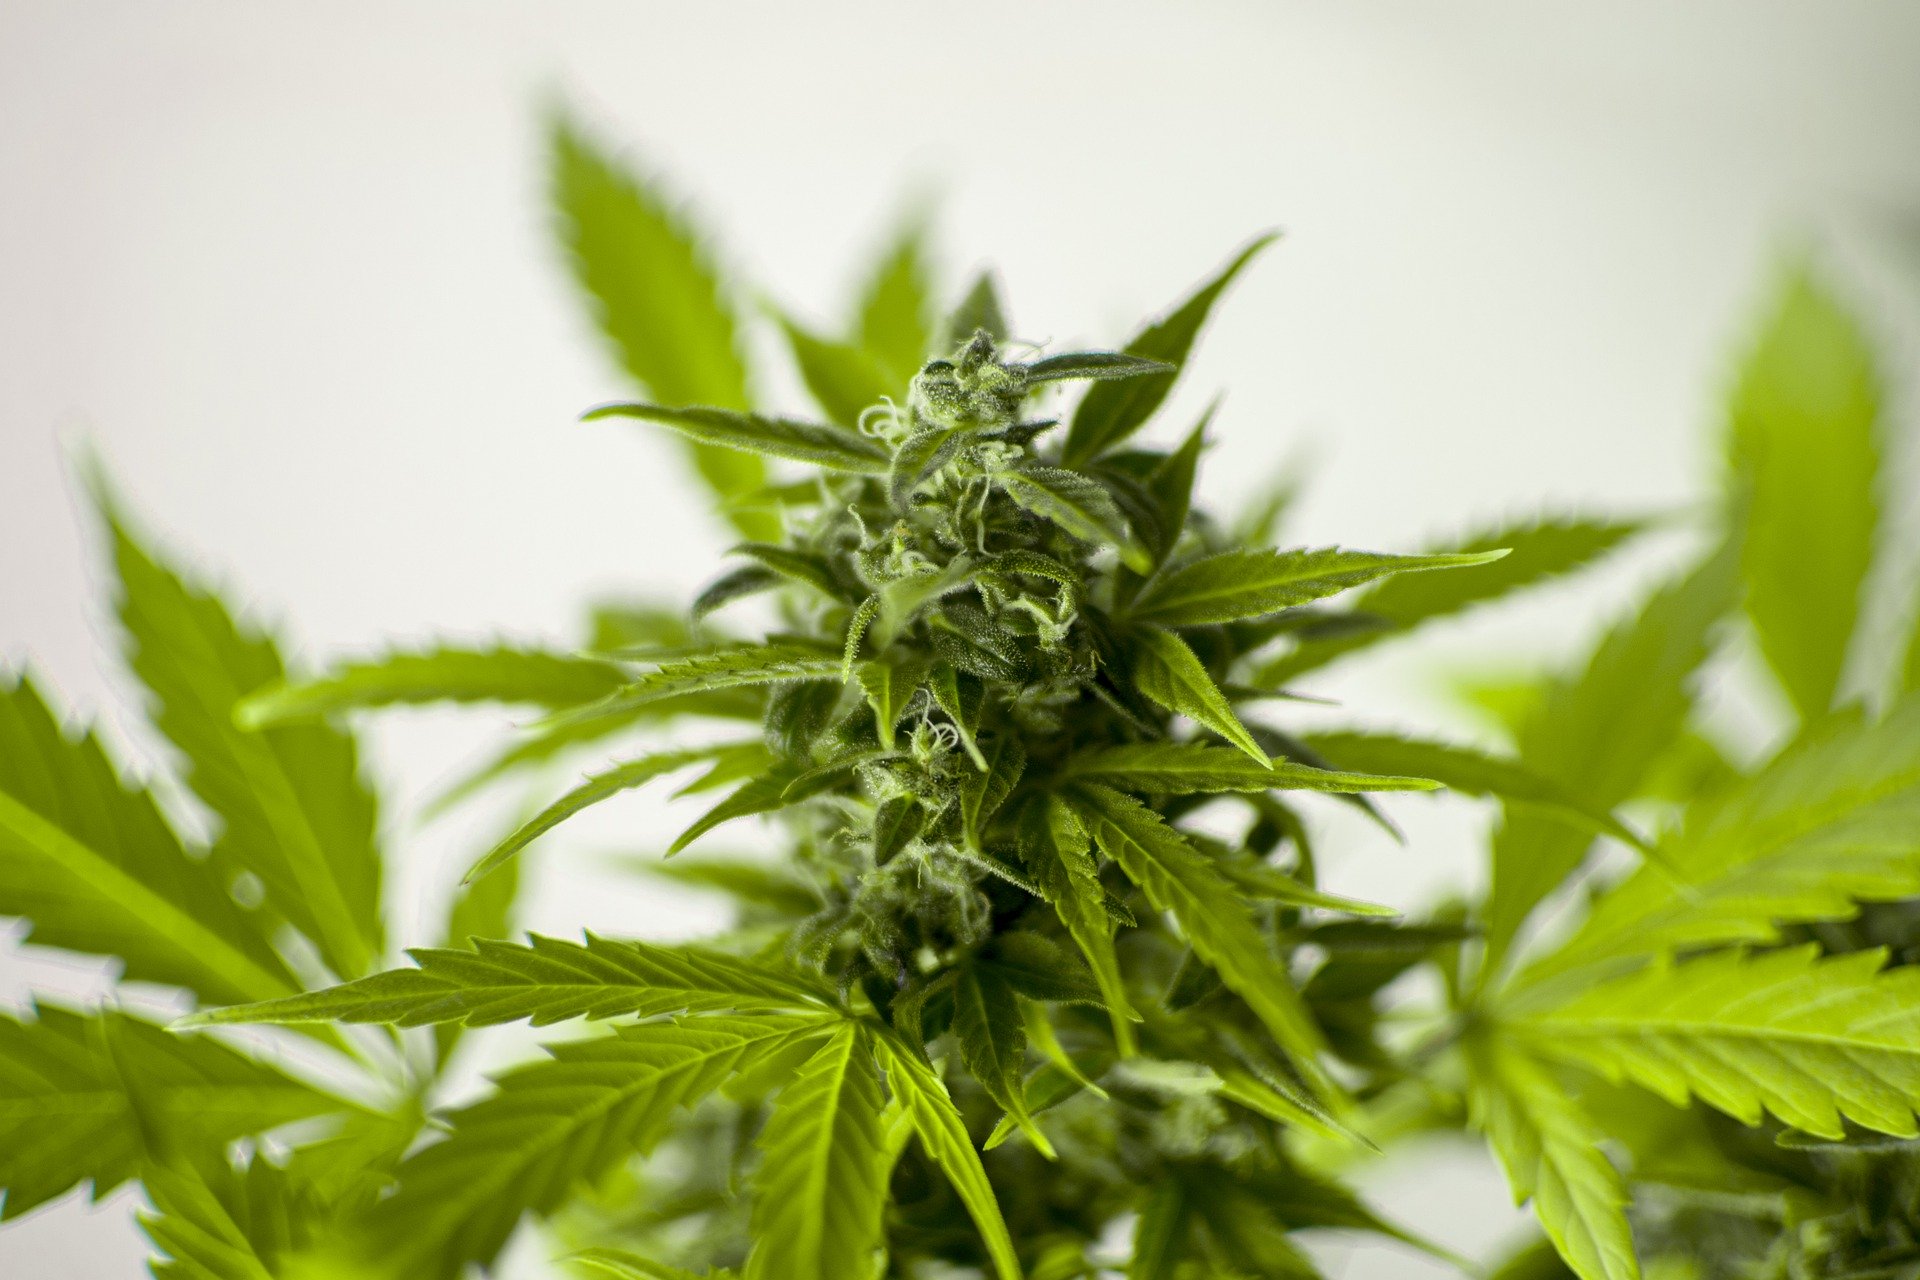 Medical Marijuana for Seniors